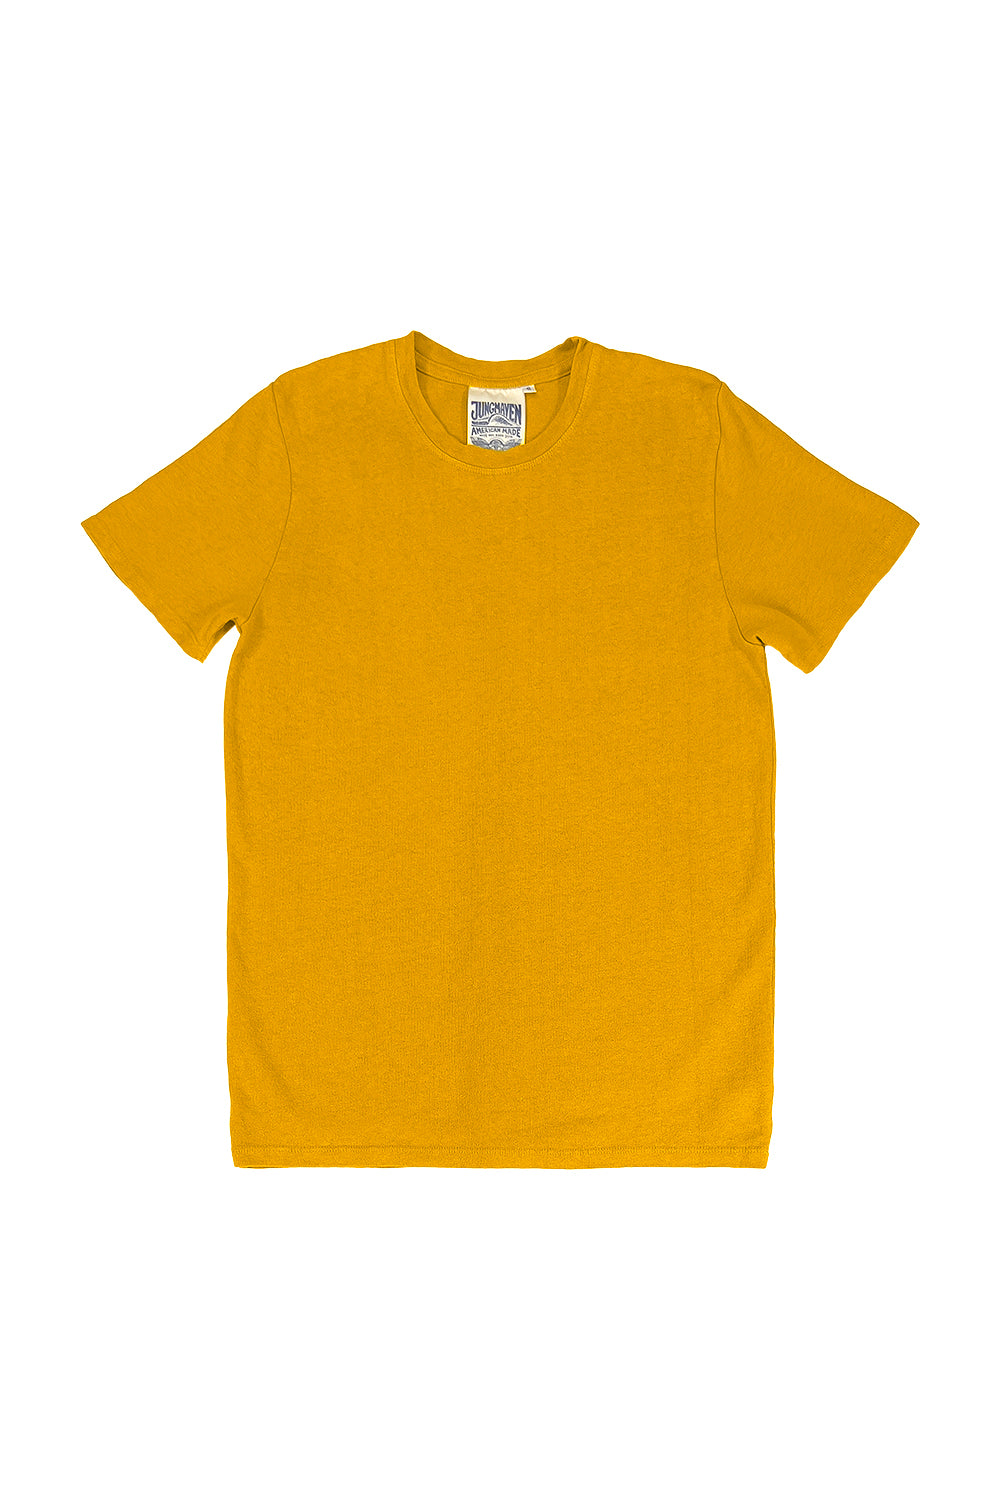 Boulder Tee | Jungmaven Hemp Clothing & Accessories / Color: Spicy Mustard